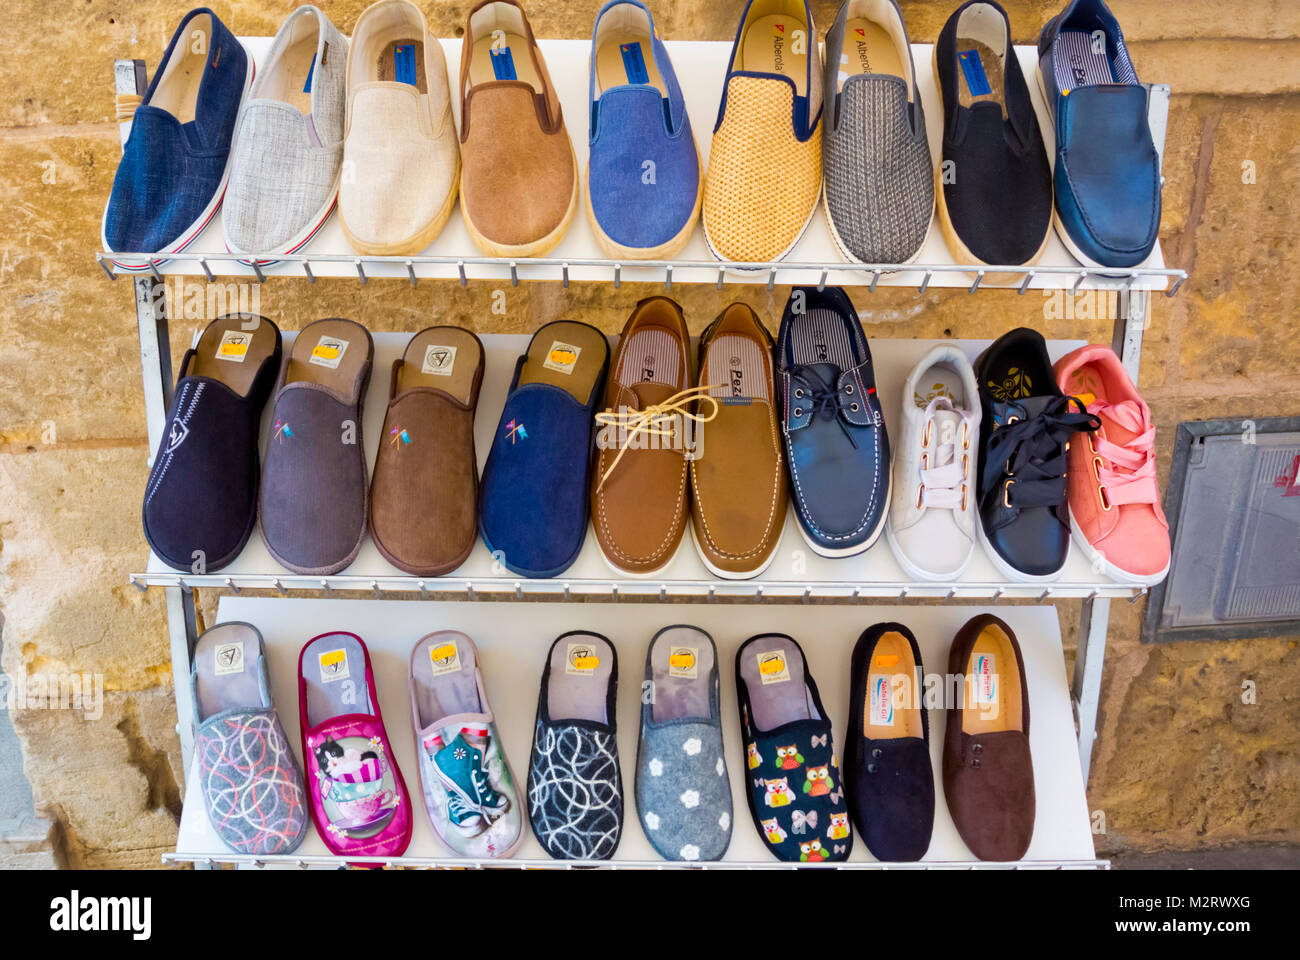 Schuhe, Carrer del Moll, Altstadt, Alcudia, Mallorca, Balearen, Spanien  Stockfotografie - Alamy